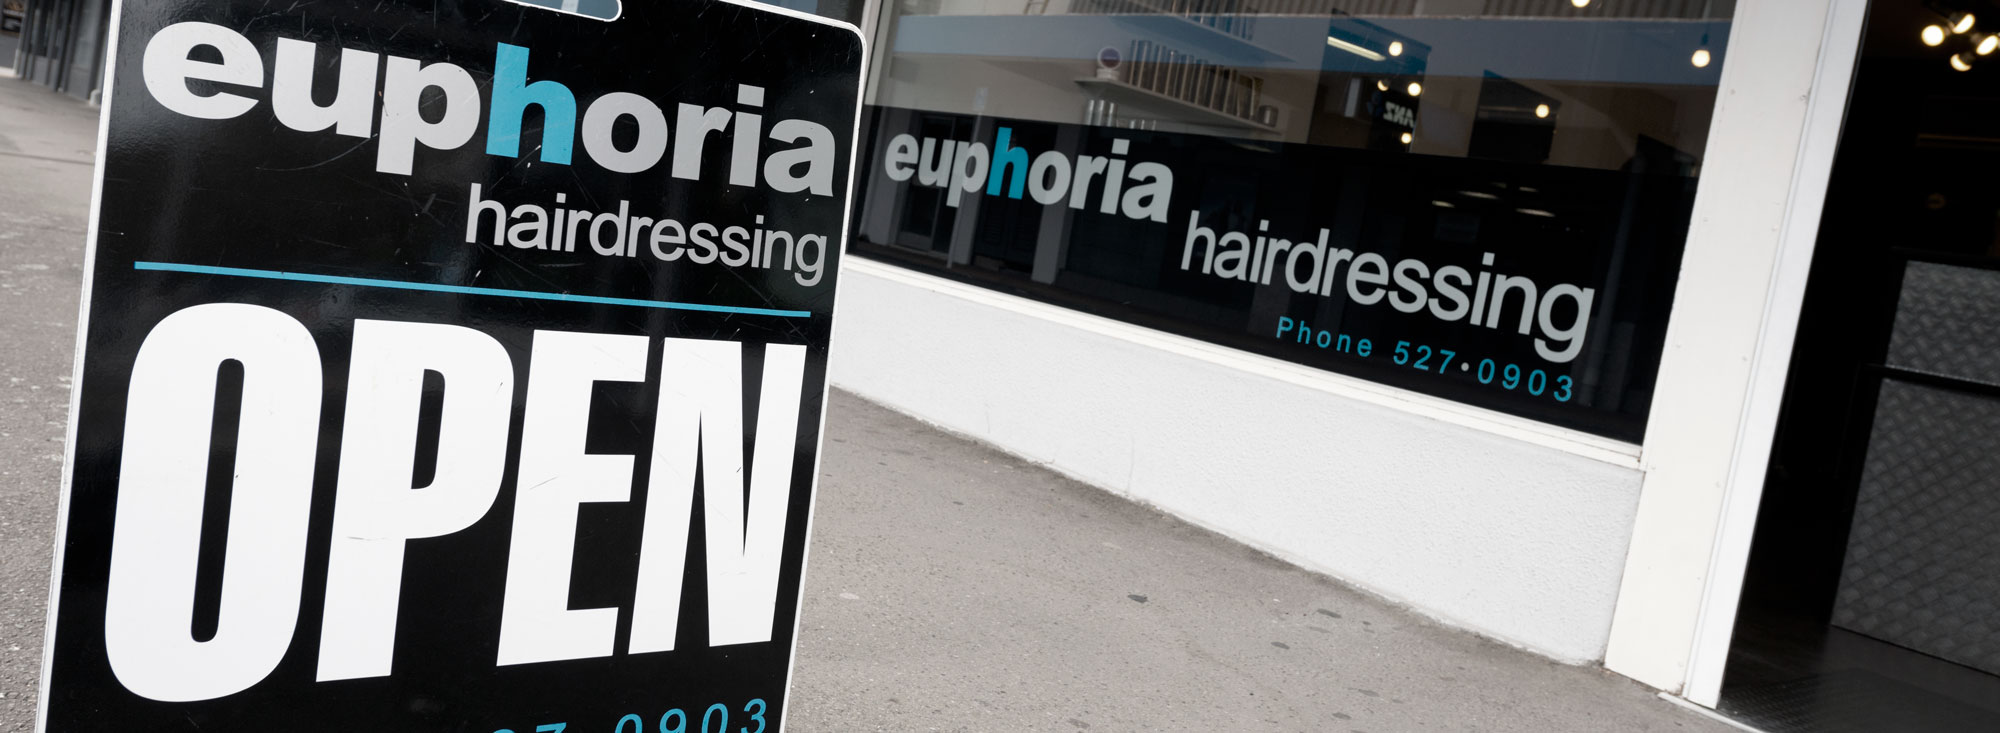 Euphoria shop front